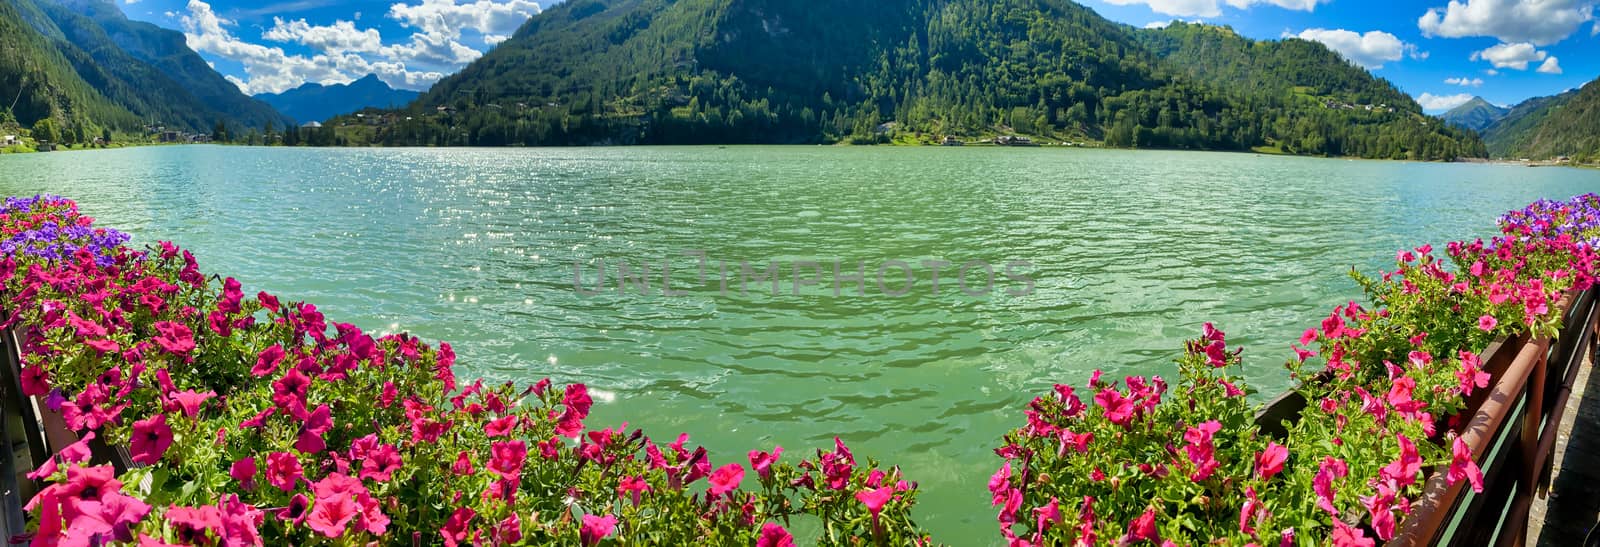 Beautiful lake of Alleghe in summer season, Italy.